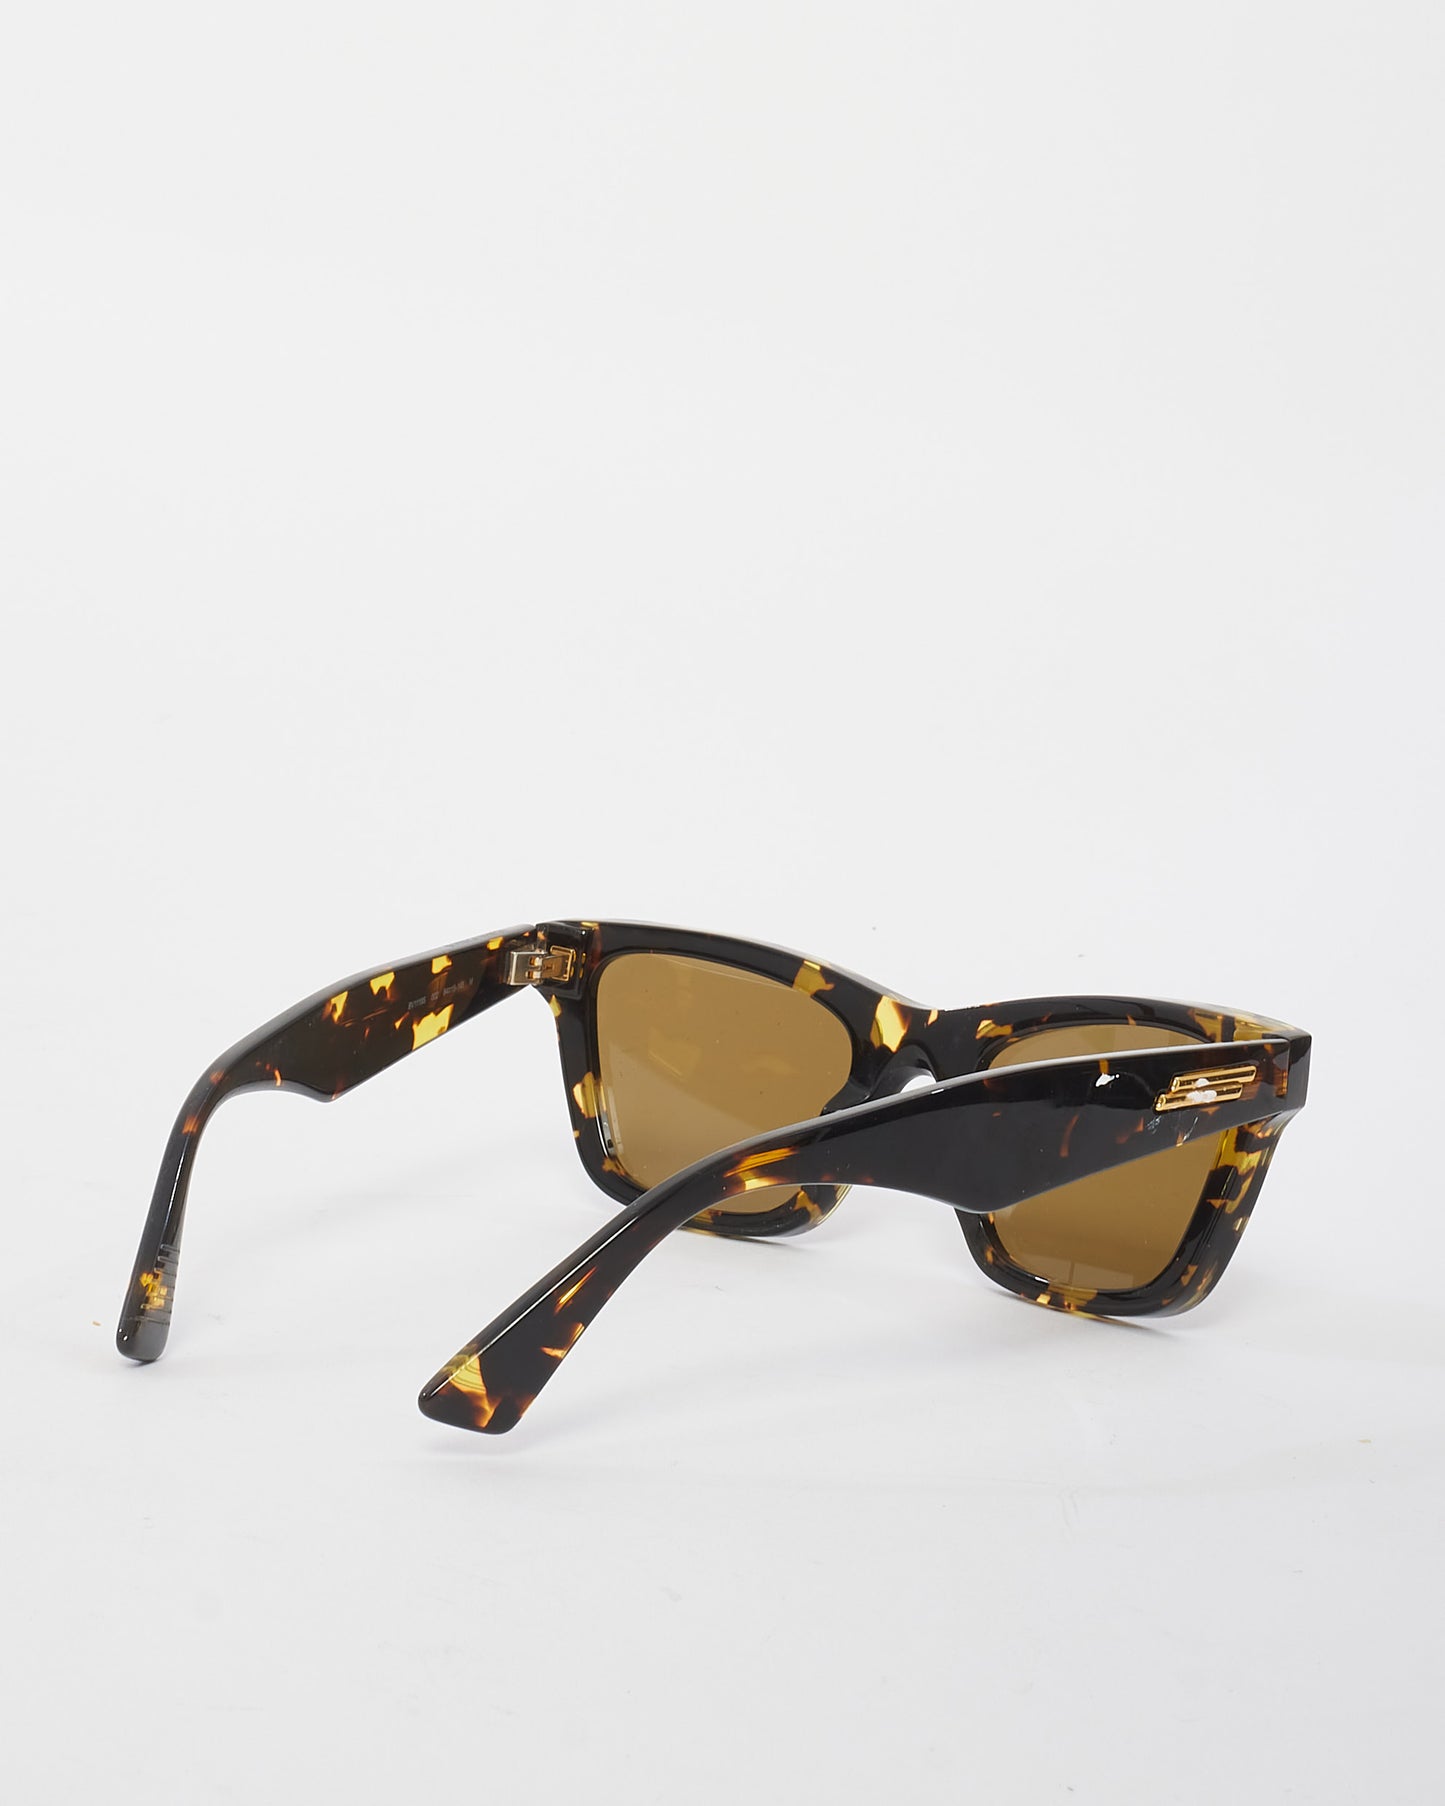 Bottega Veneta Tortoise Wayferer Sunglasses